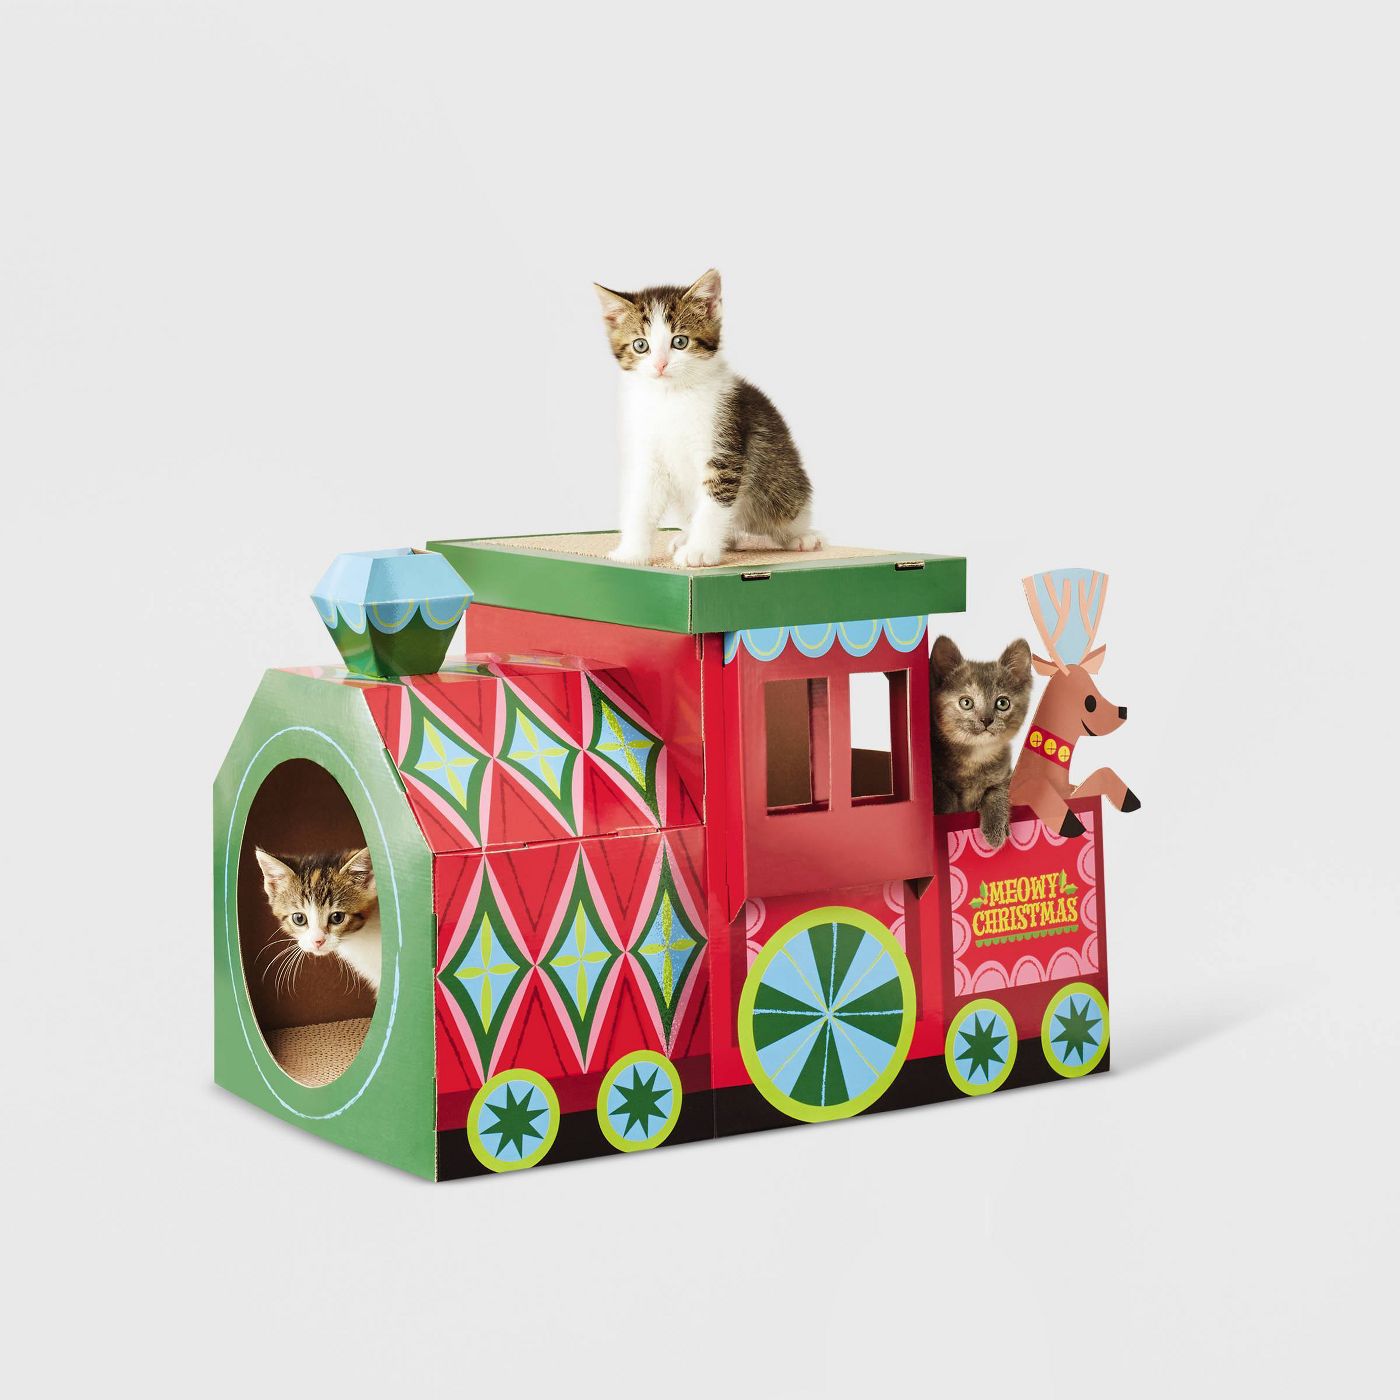 cardboard Christmas train with three kittens